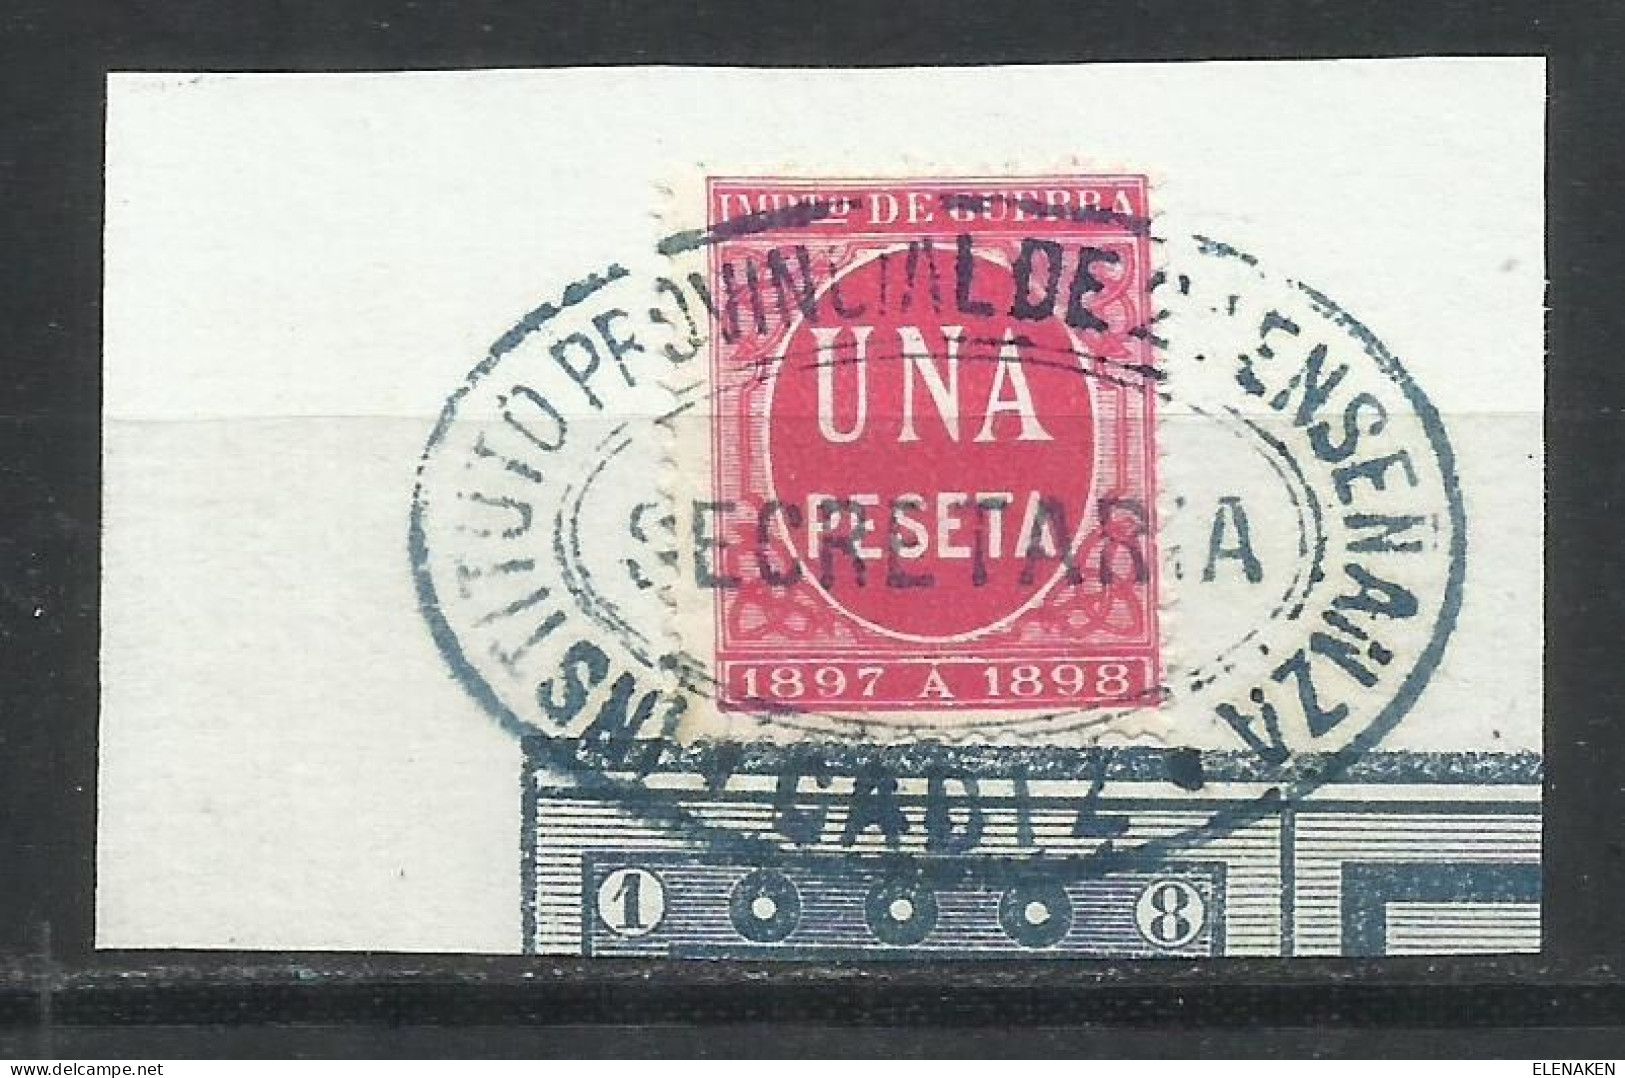 8527-SELLO FISCAL IMPUESTO GUERRA 1897-1898 1 PTA CADIZ INSTITUTO PROVINCIAL CADIZ. EDIFIL ALEMANY SPAIN REVENUE FISCAUX - War Tax